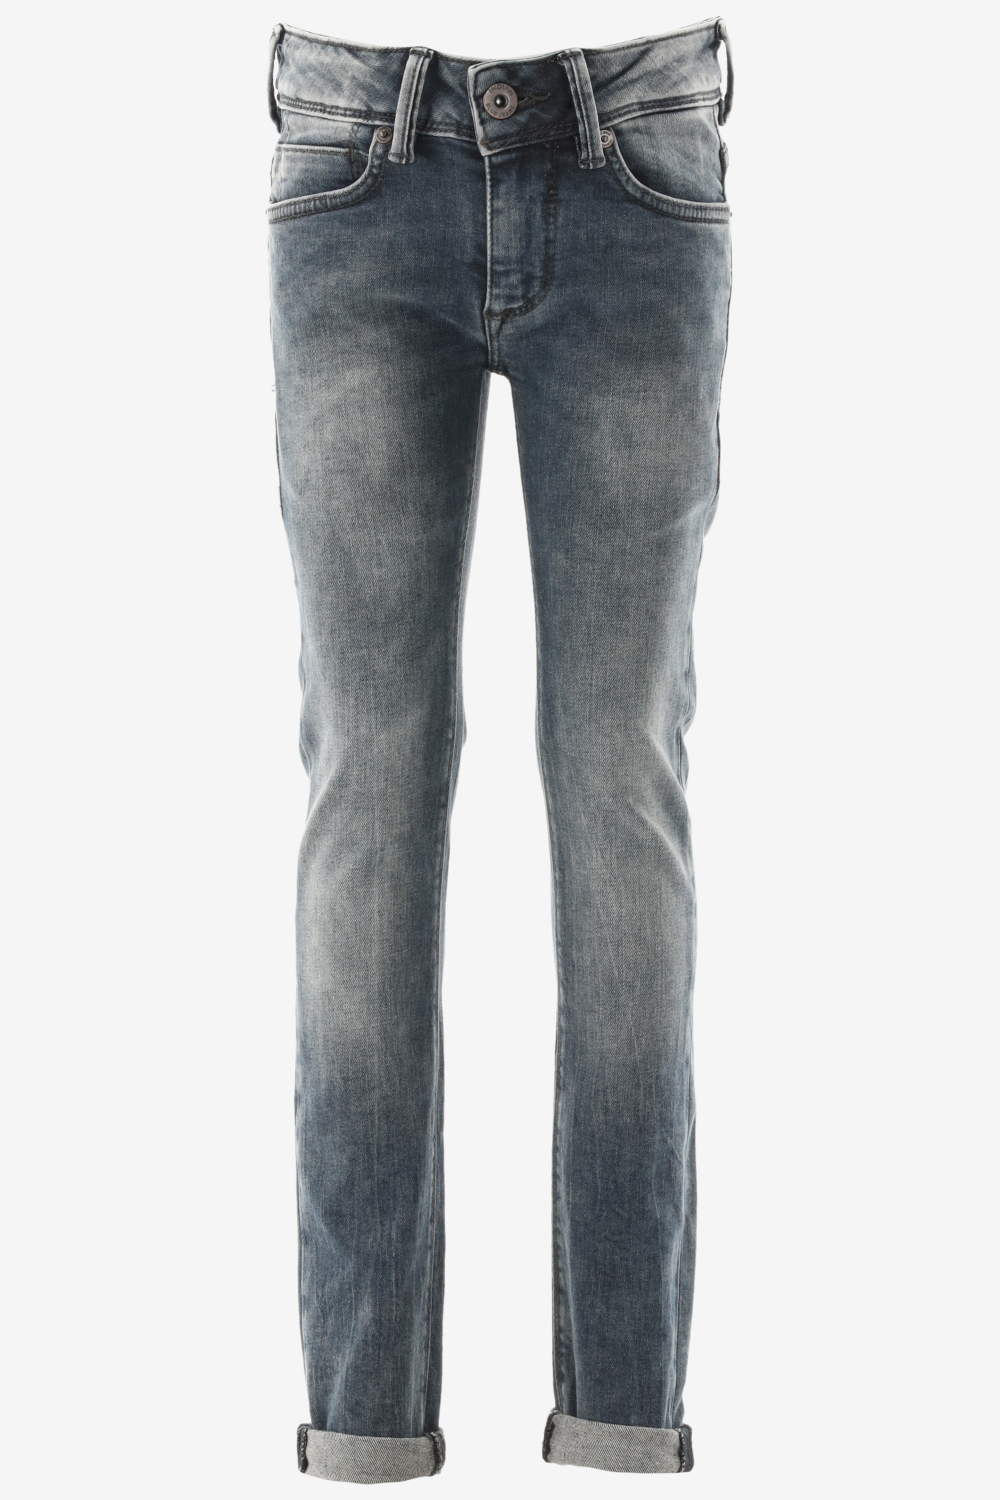 Indian Blue Jeans Jeans jongen blue grey denim maat 122